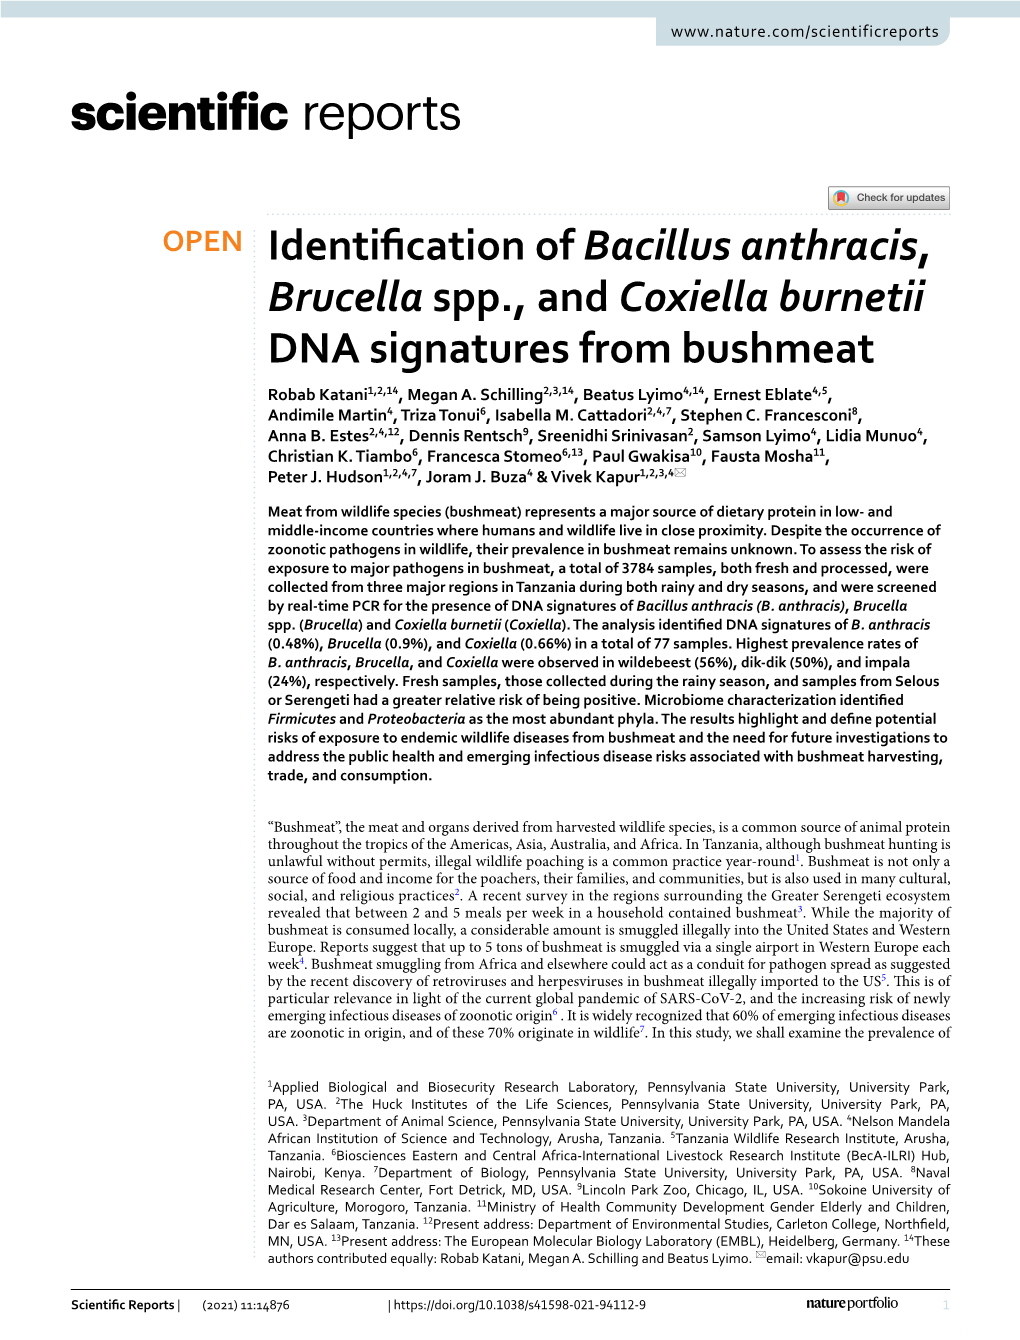 Identification of Bacillus Anthracis, Brucella Spp., and Coxiella Burnetii